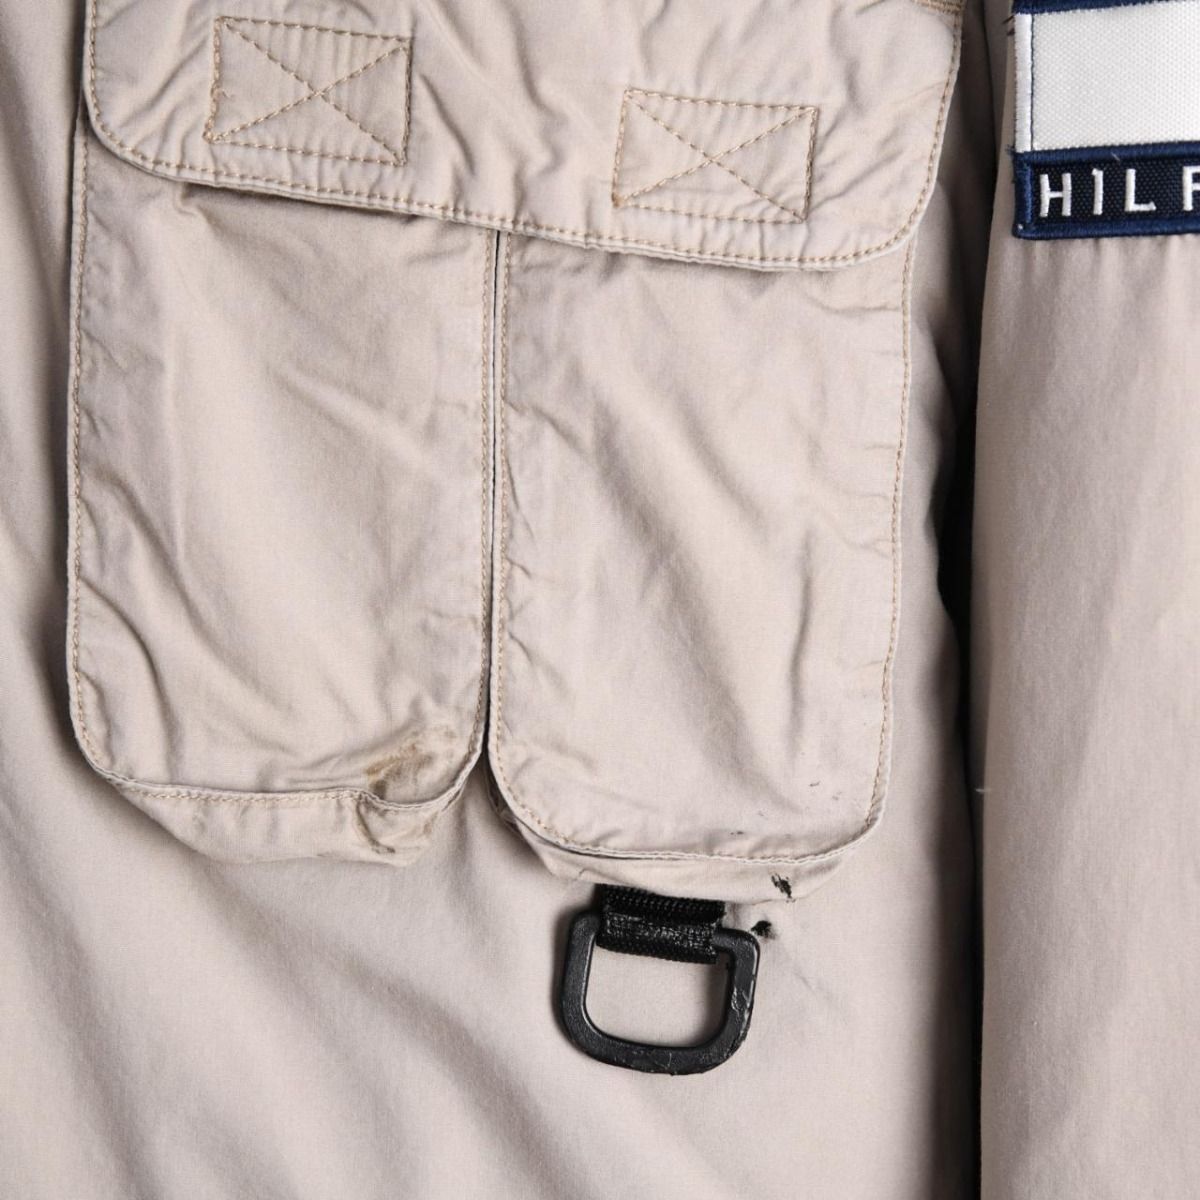 Tommy Hilfiger 1990s Padded Jacket 